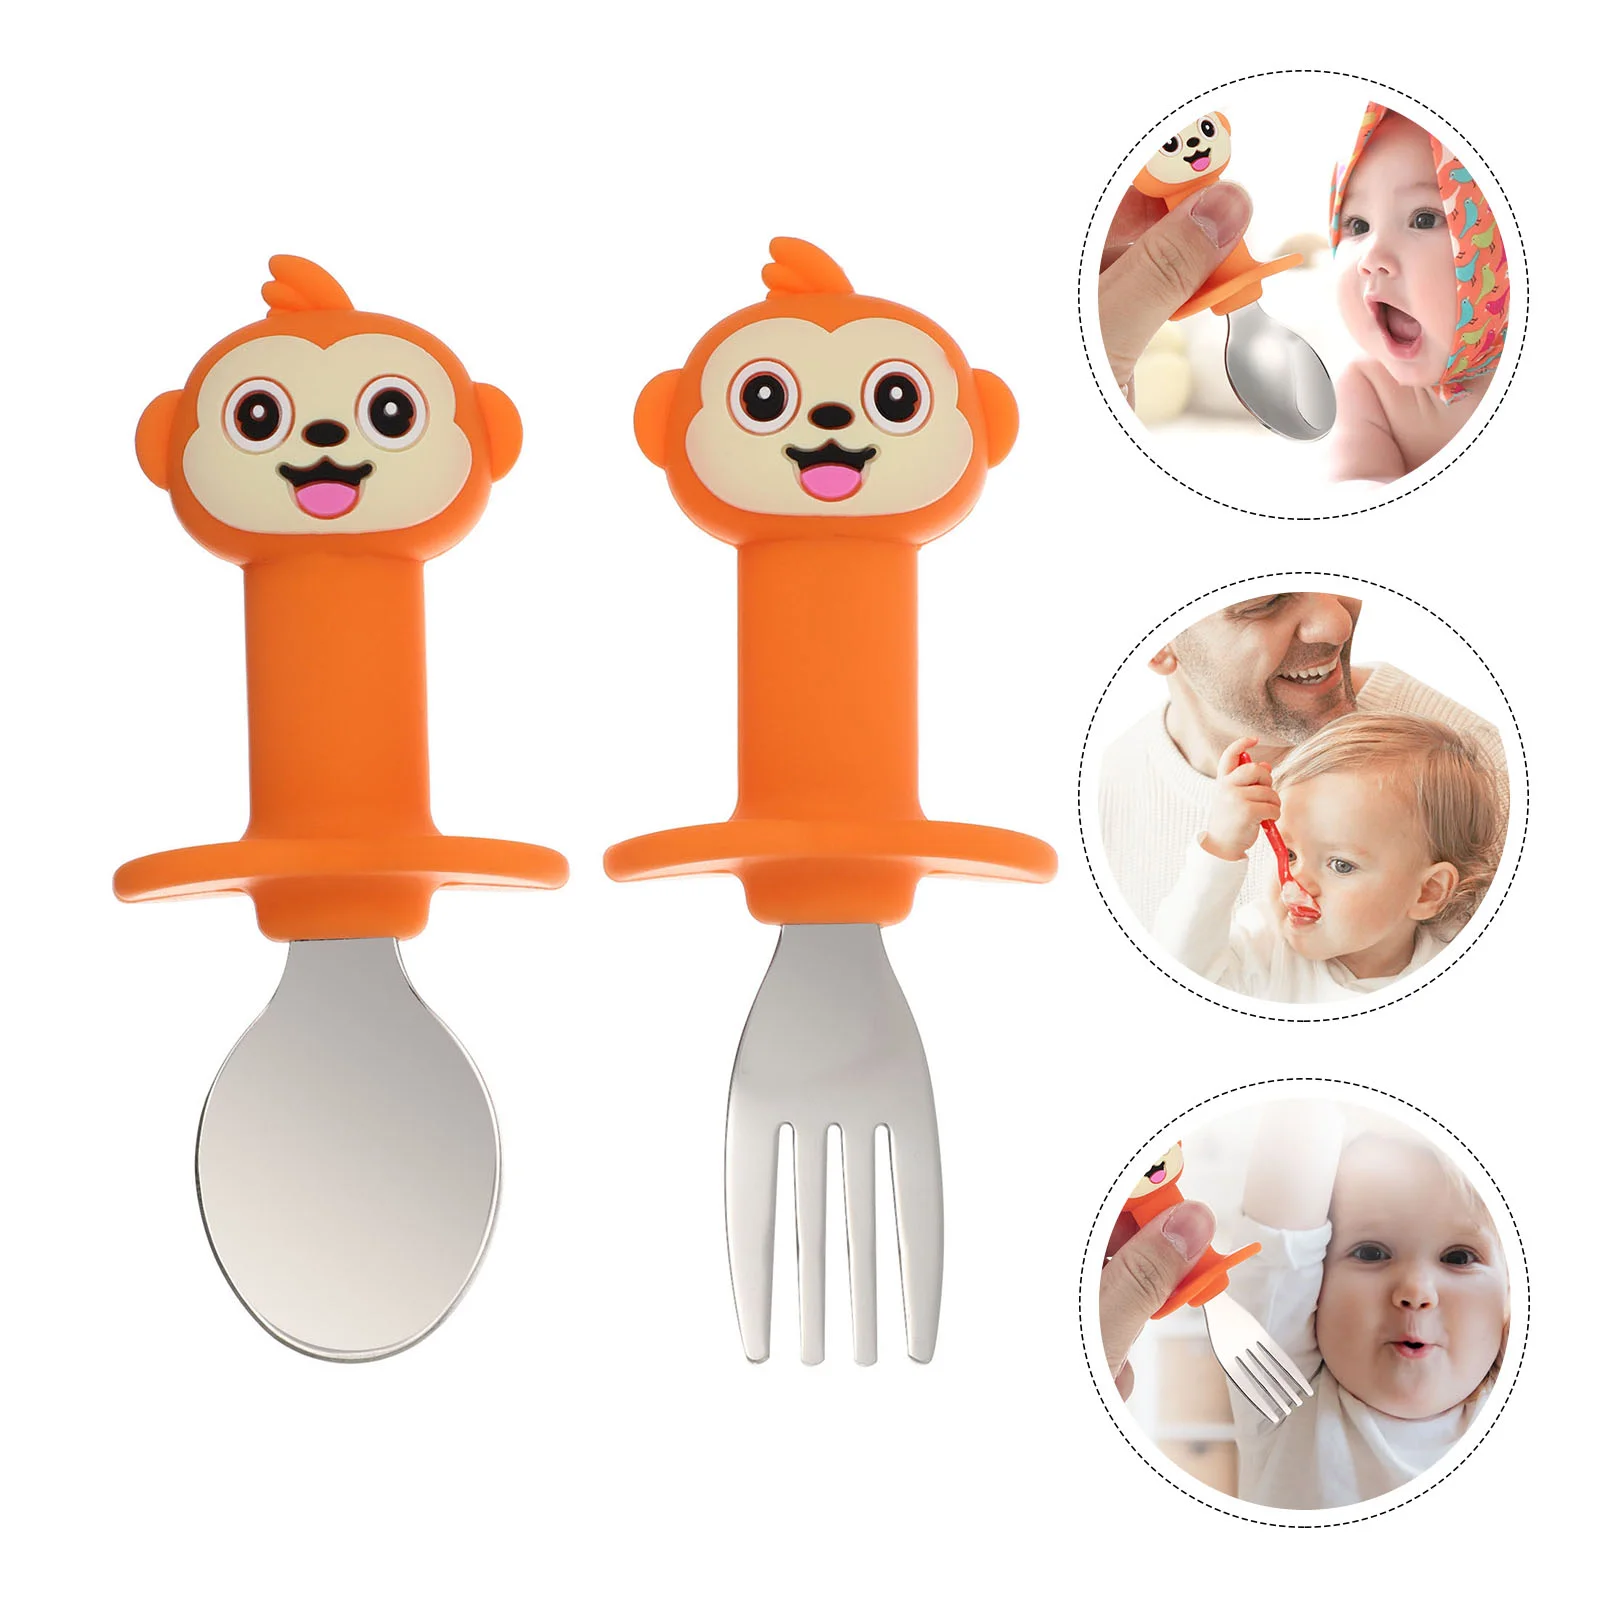 

Baby Tableware Utensils Kids Spoon Training Eating Feeding Spoons Fork Toddler Dinning Self Forks Learning Practice Accessories